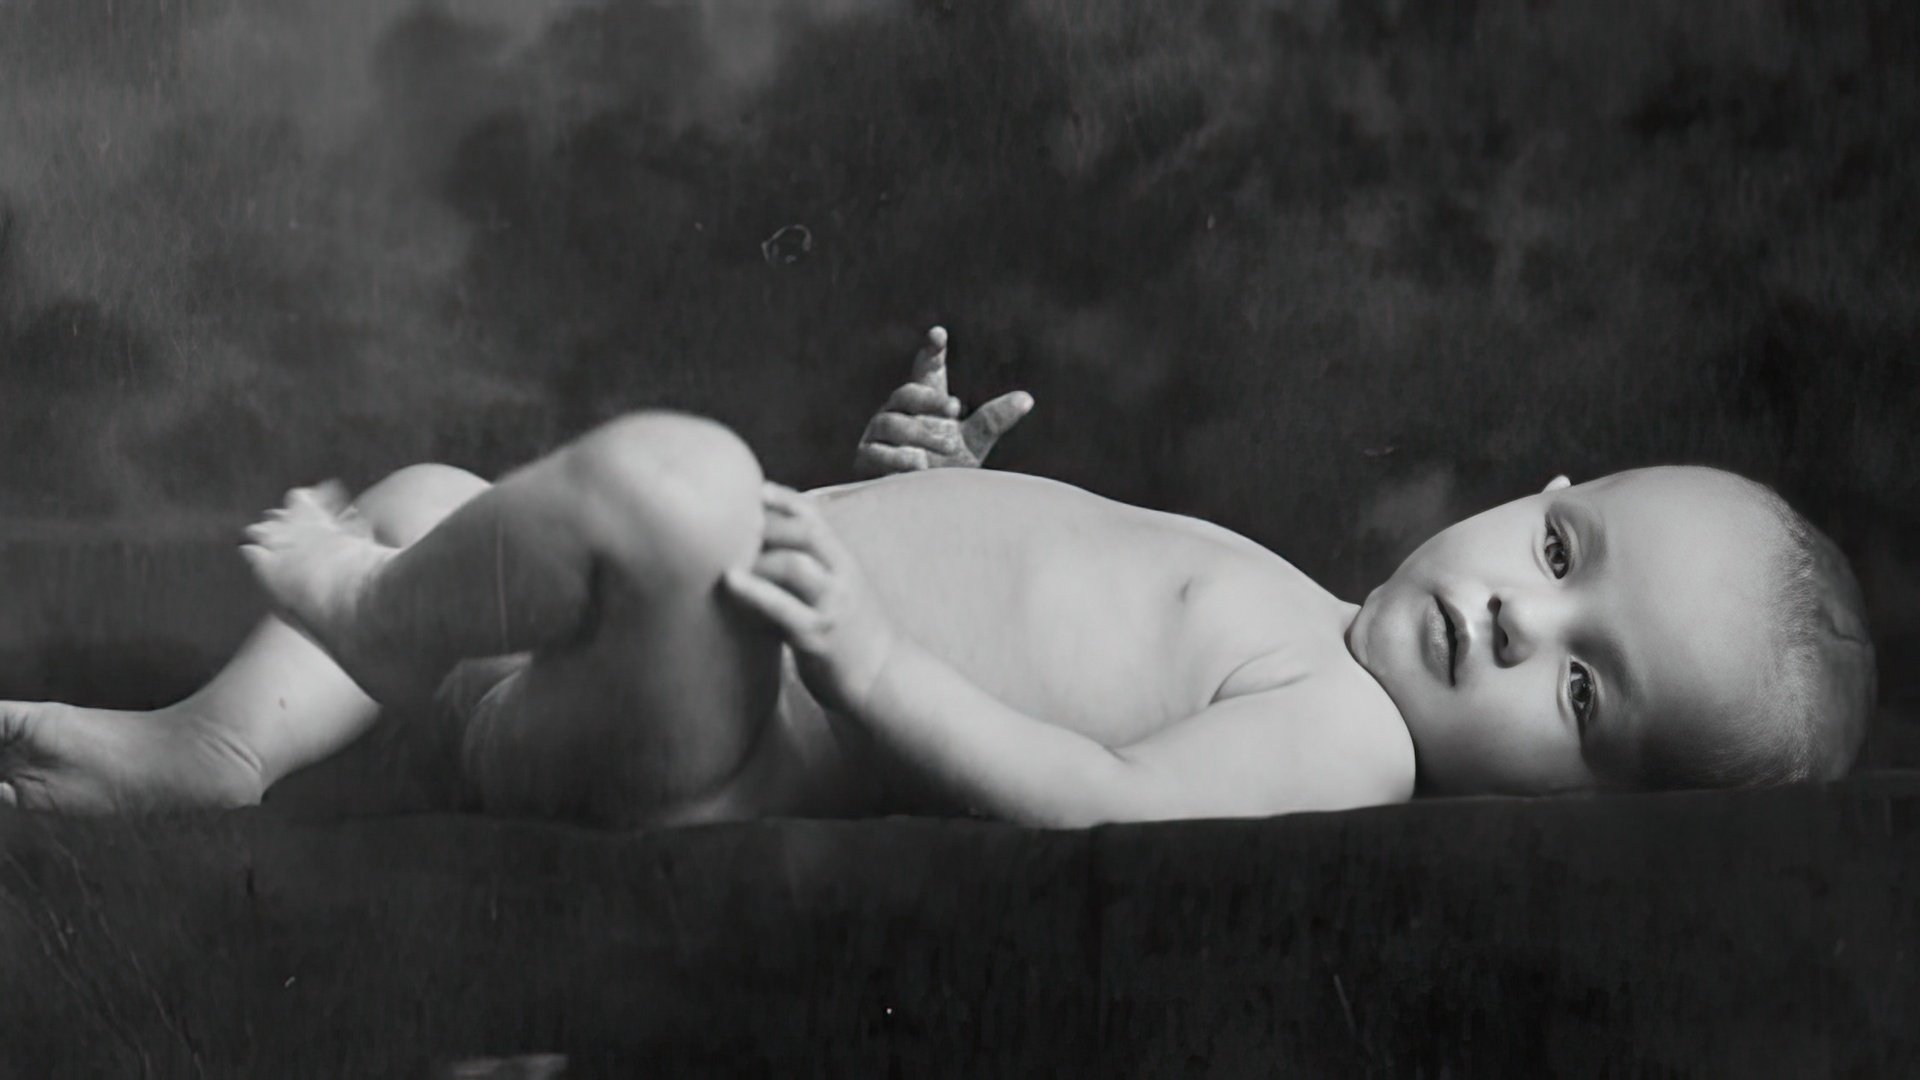 Norma Jeane (Marilyn Monroe) as an infant